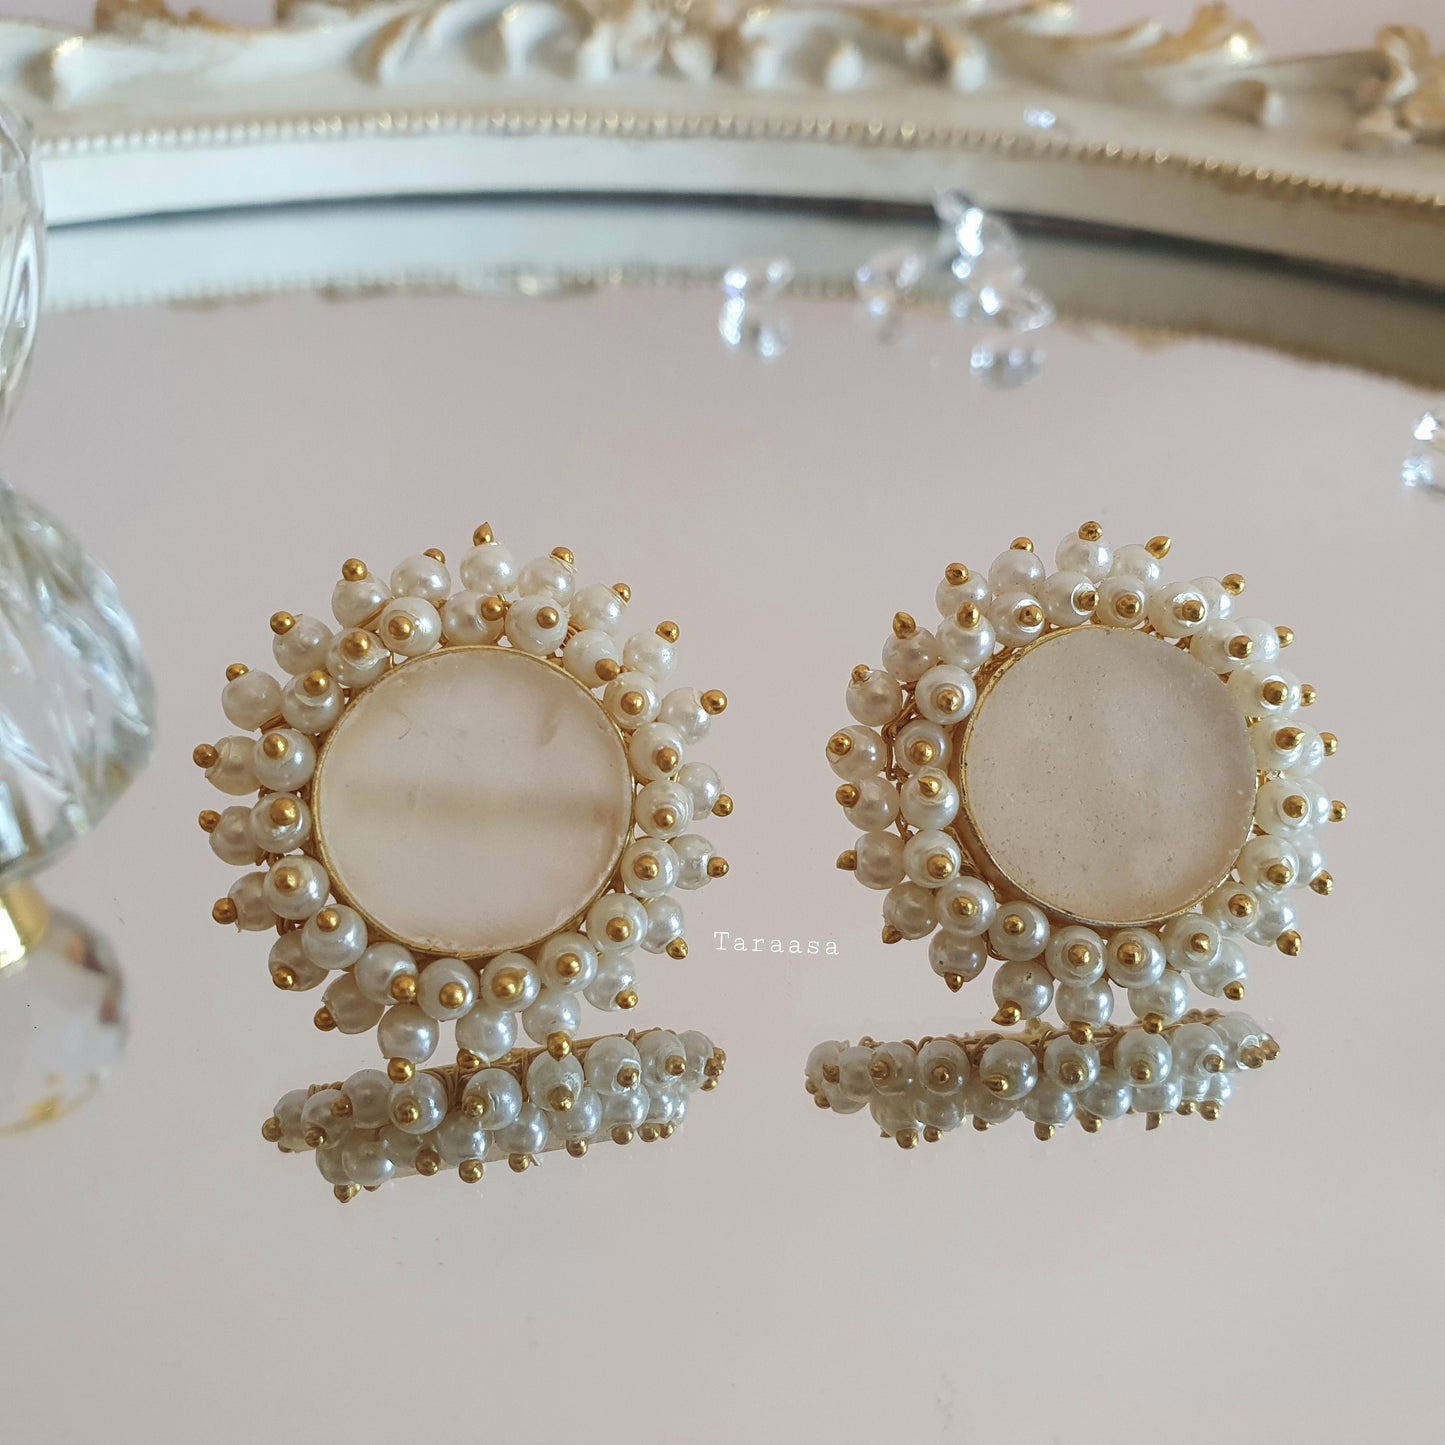 Snow Quartz Crystal Earrings